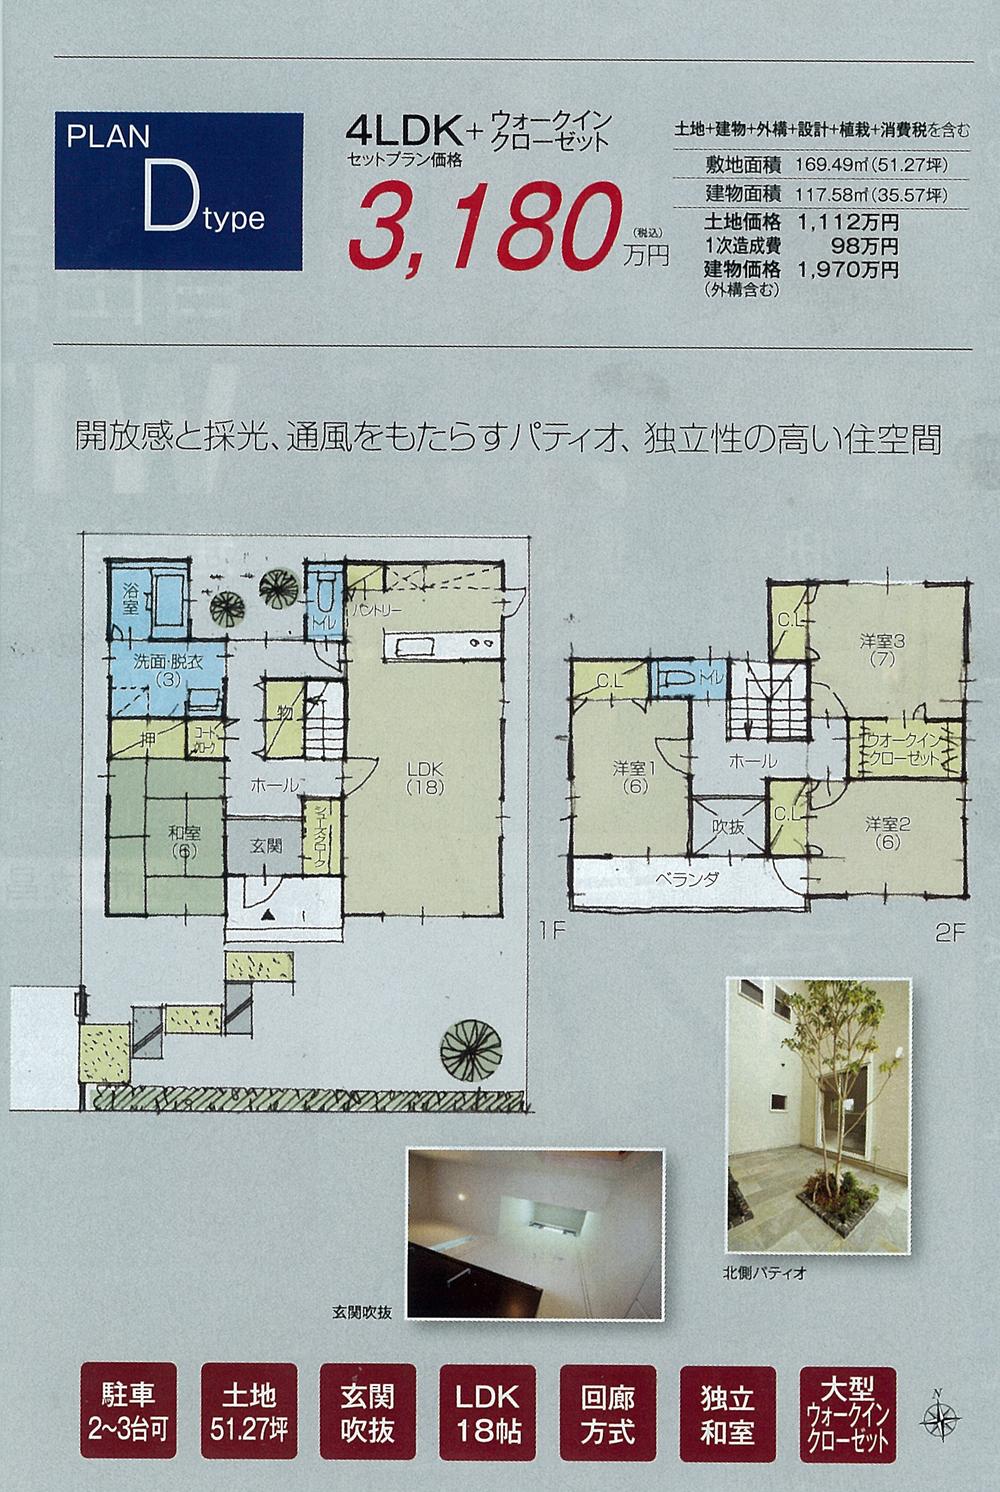 Compartment view + building plan example. Building plan example (D) 4LDK + S, Land price 12.1 million yen, Land area 169.49 sq m , Building price 19.7 million yen, Building area 117.58 sq m